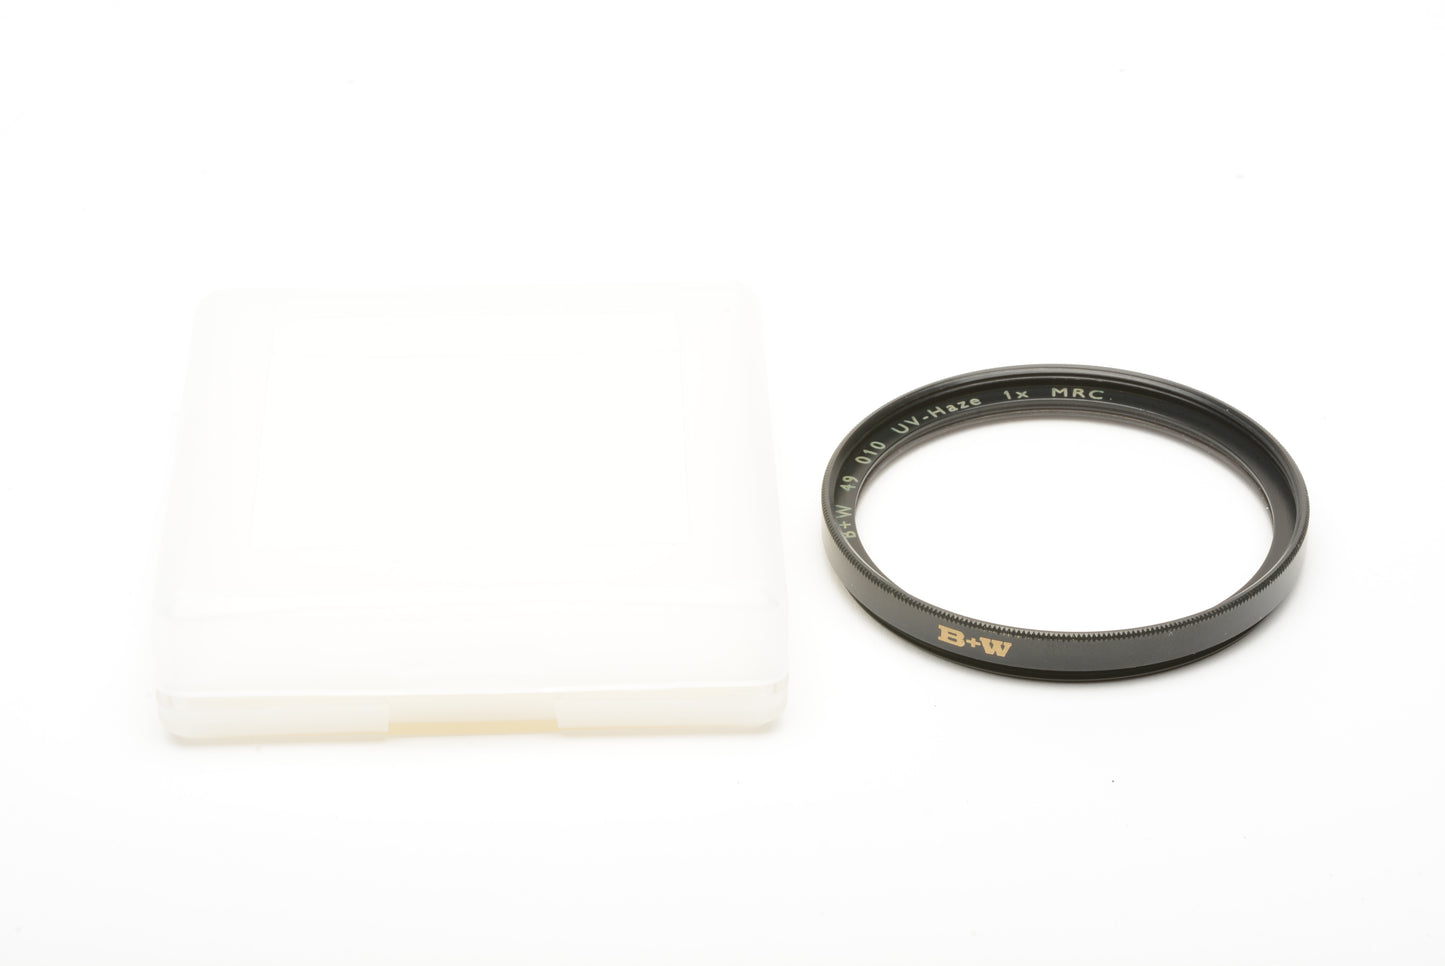 B+W 49mm UV 010 1X MRC filter in jewel case, very clean